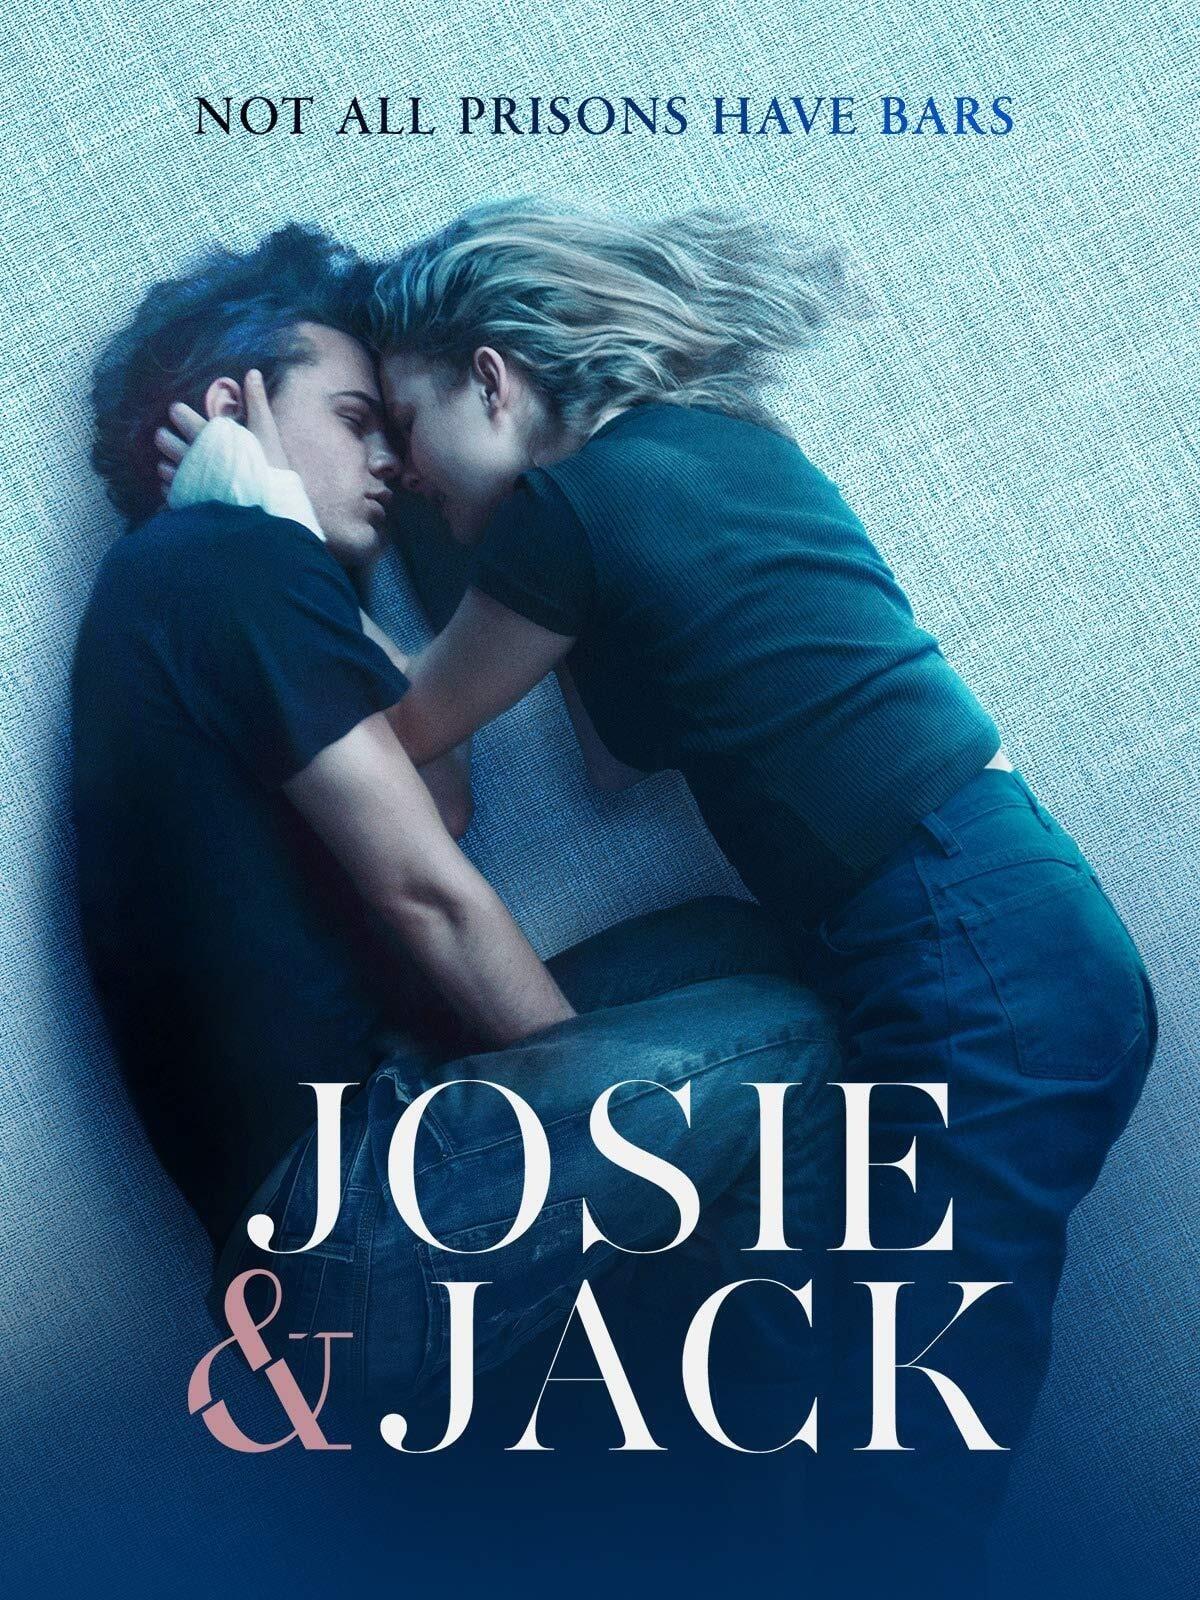 Josie & Jack poster